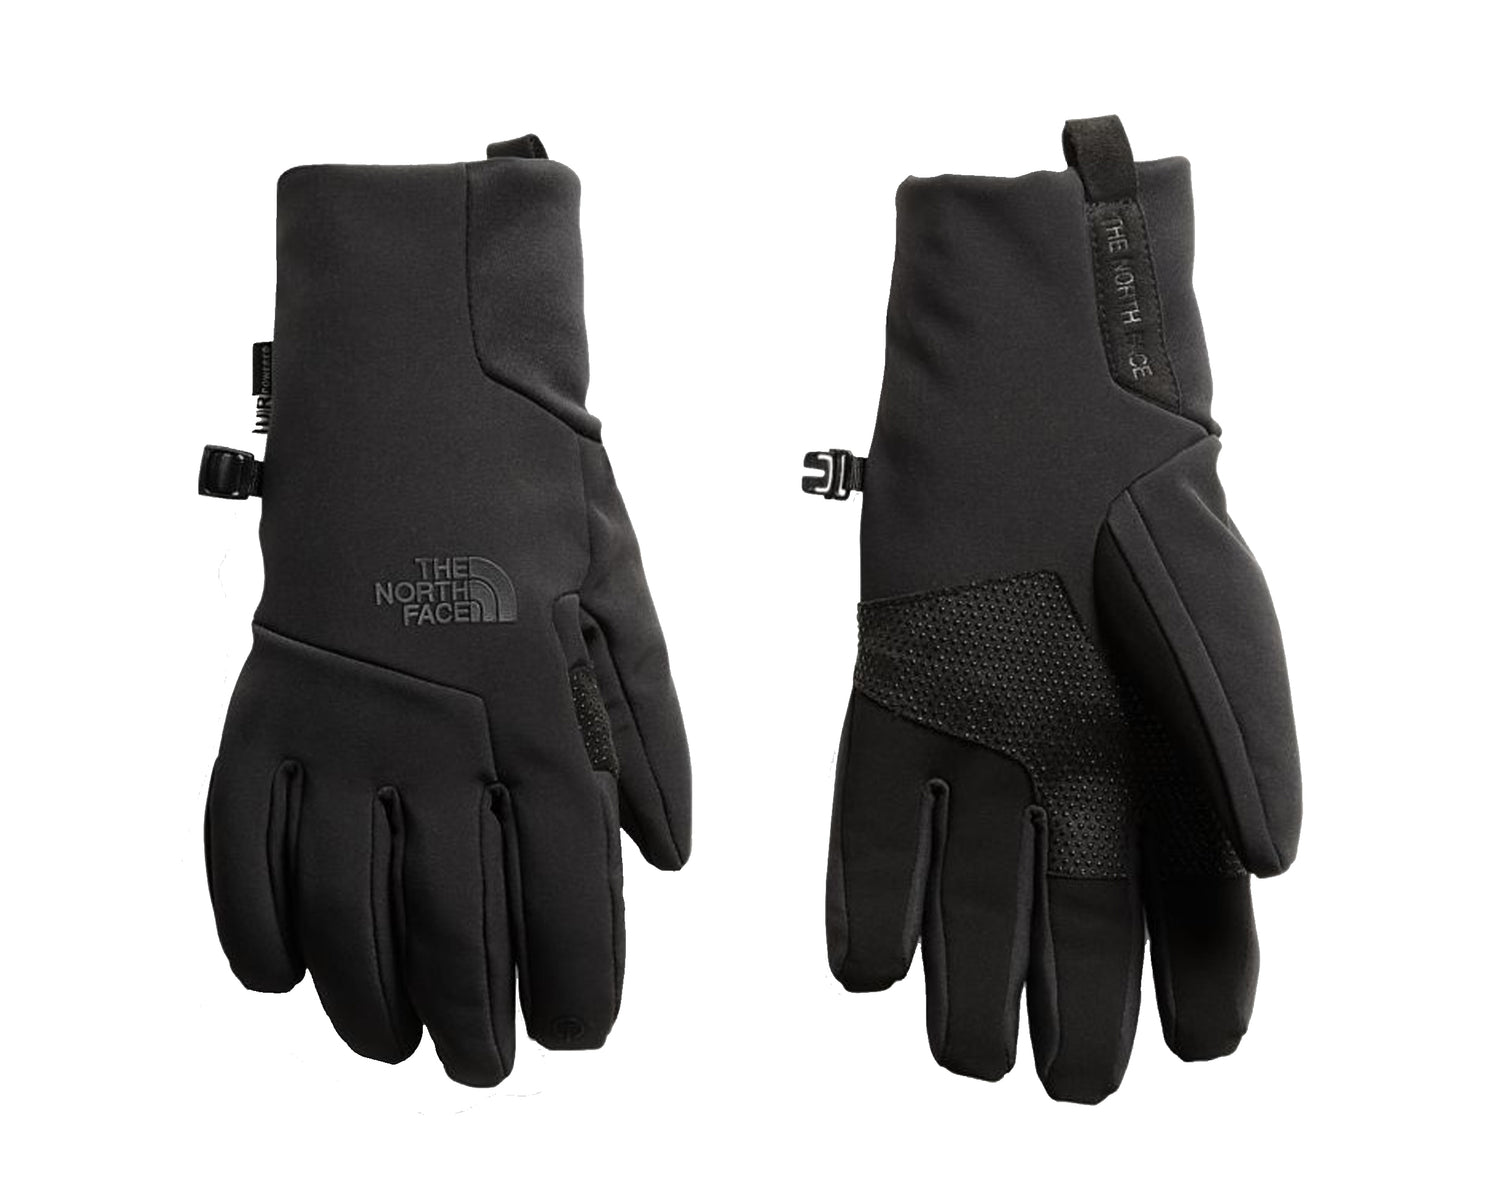 The North Face Apex Etip Men's Gloves